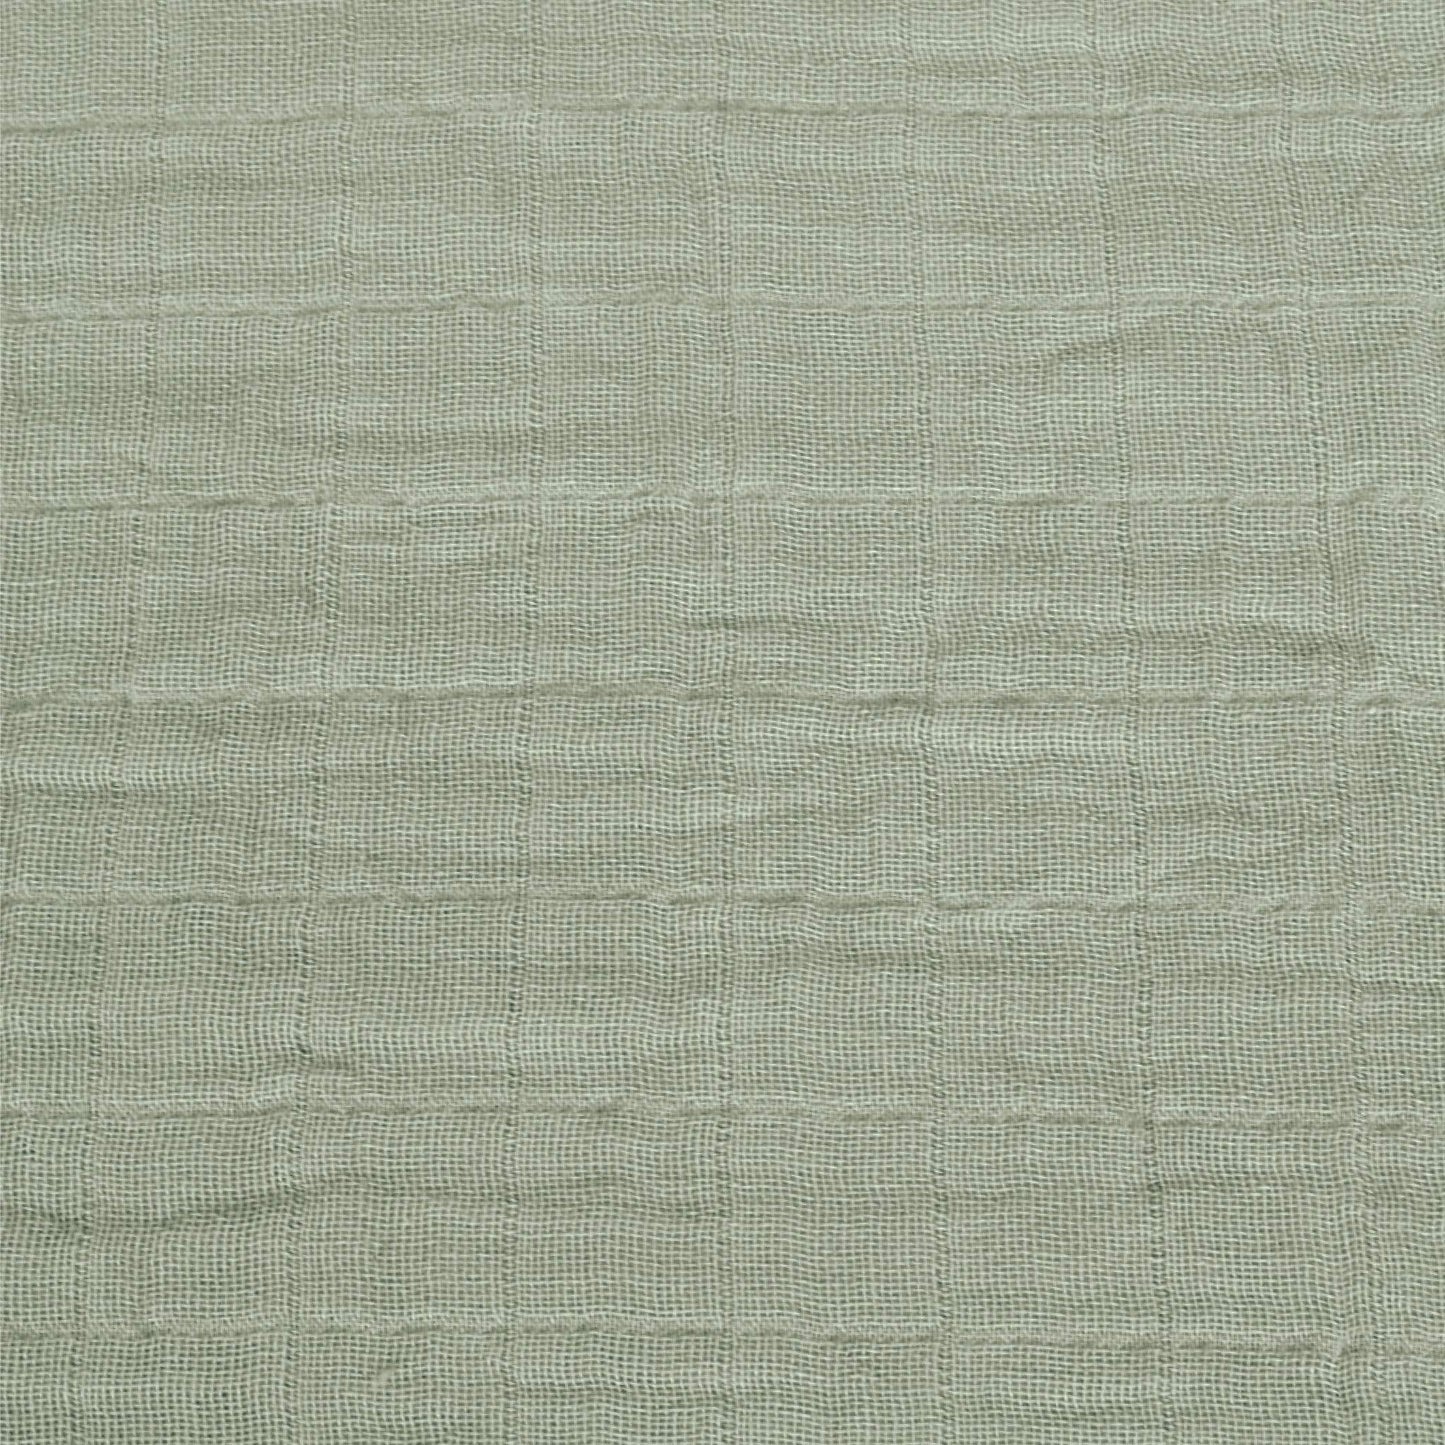 Cotton muslin change pad cover - kaki